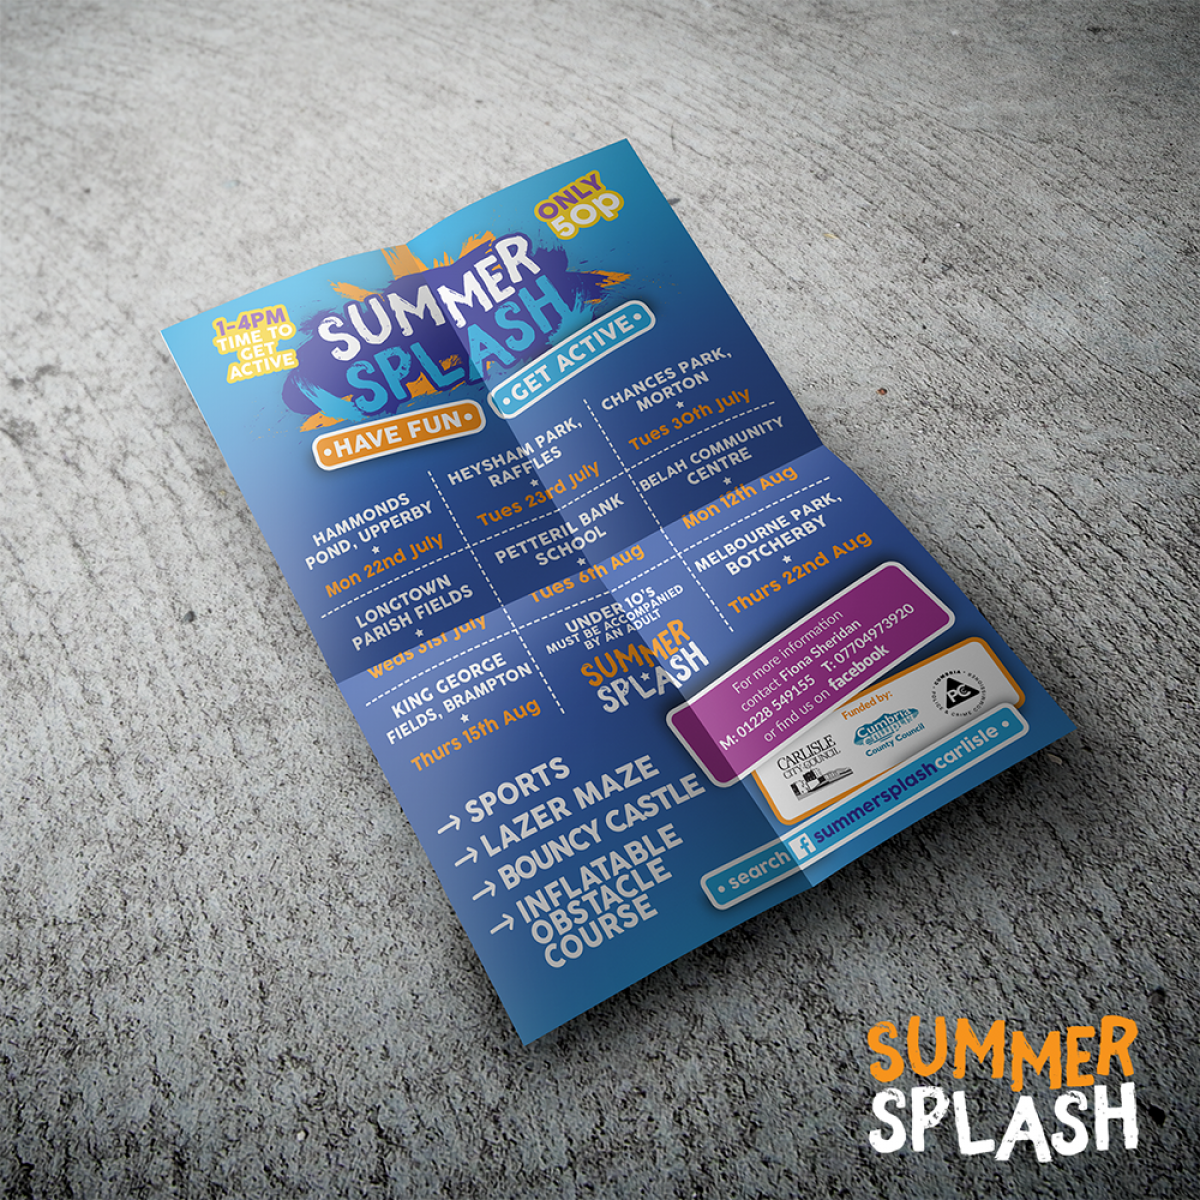 Summer Splash 2019 Poster